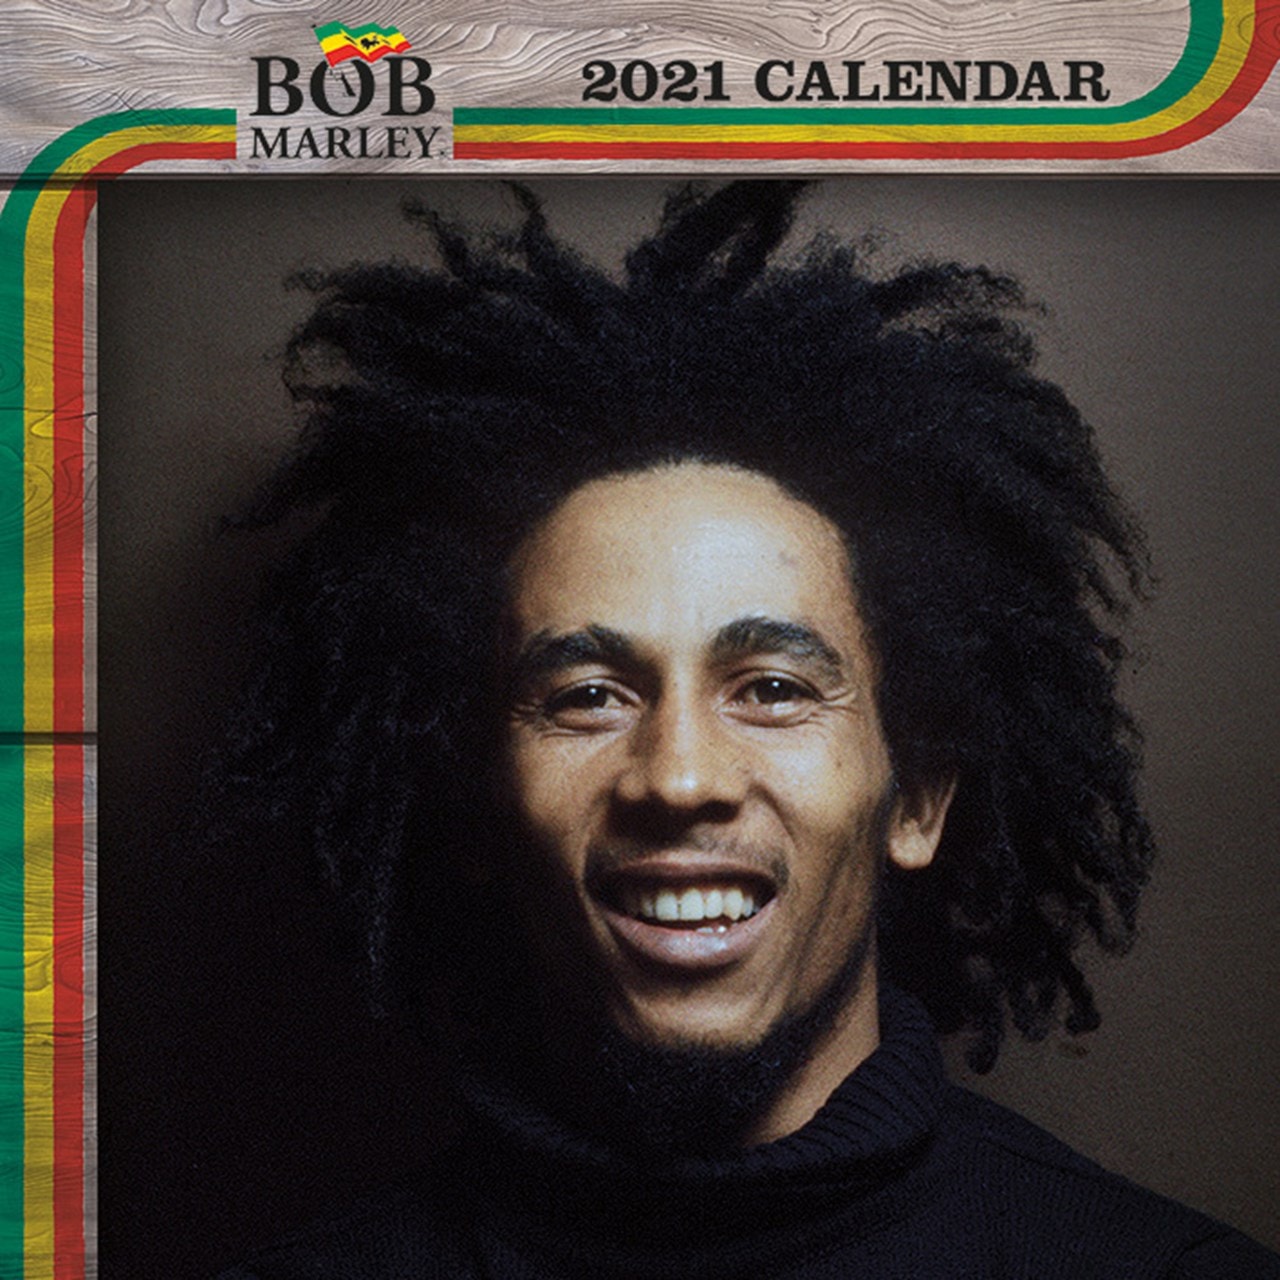 bob-marley-square-2021-calendar-calendars-free-shipping-over-20